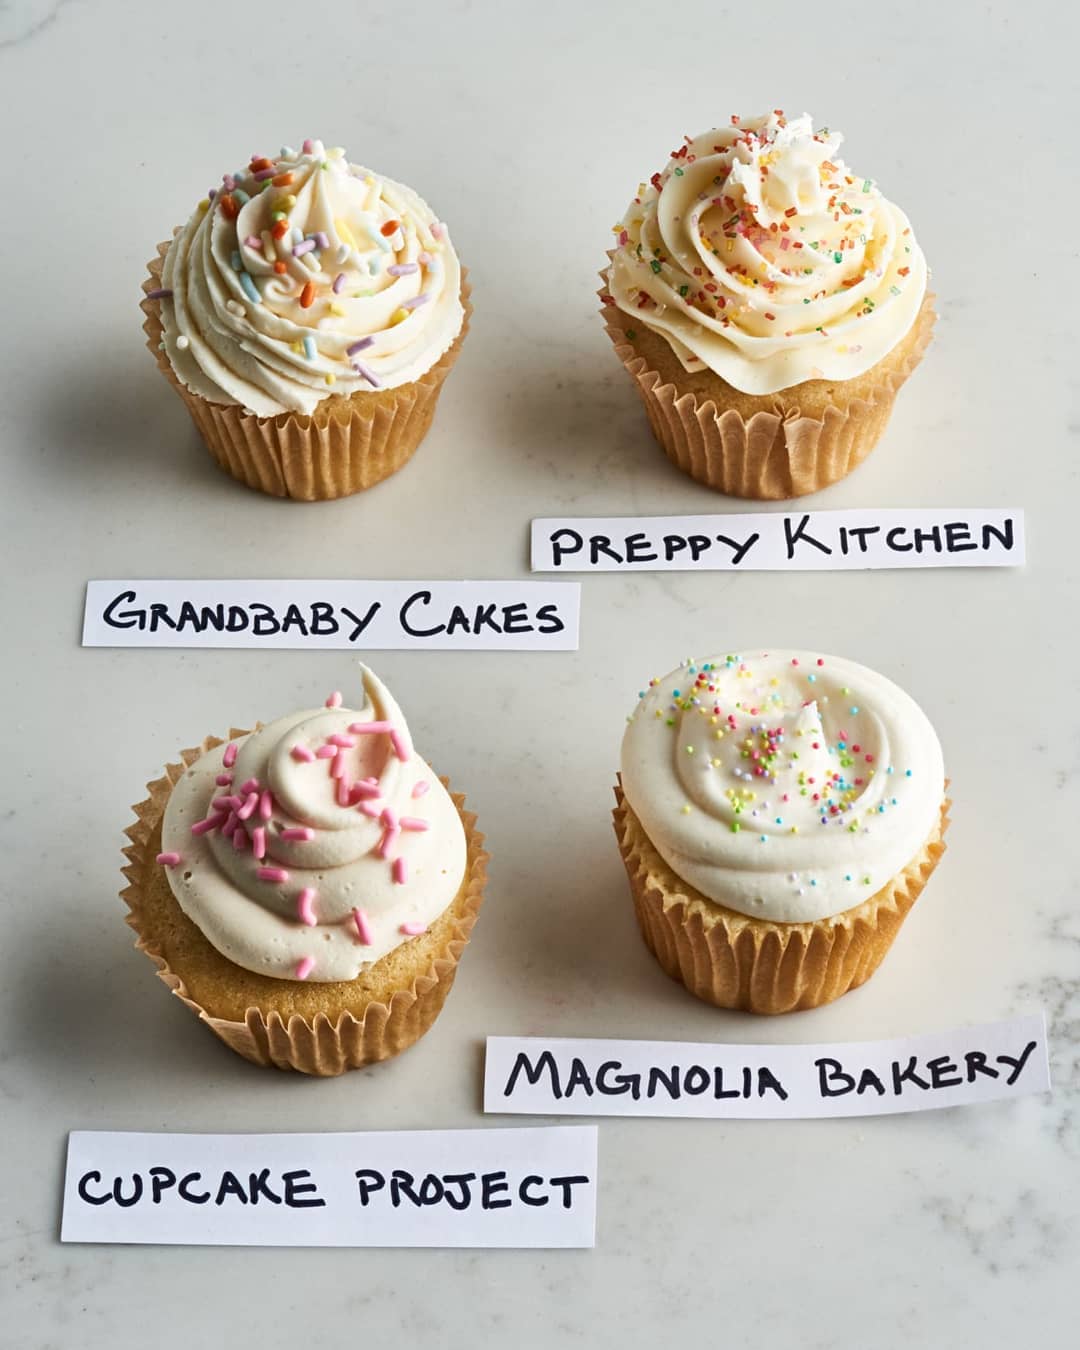 Gallery image for https://www.thekitchn.com/vanilla-cupcake-recipe-reviews-23198138